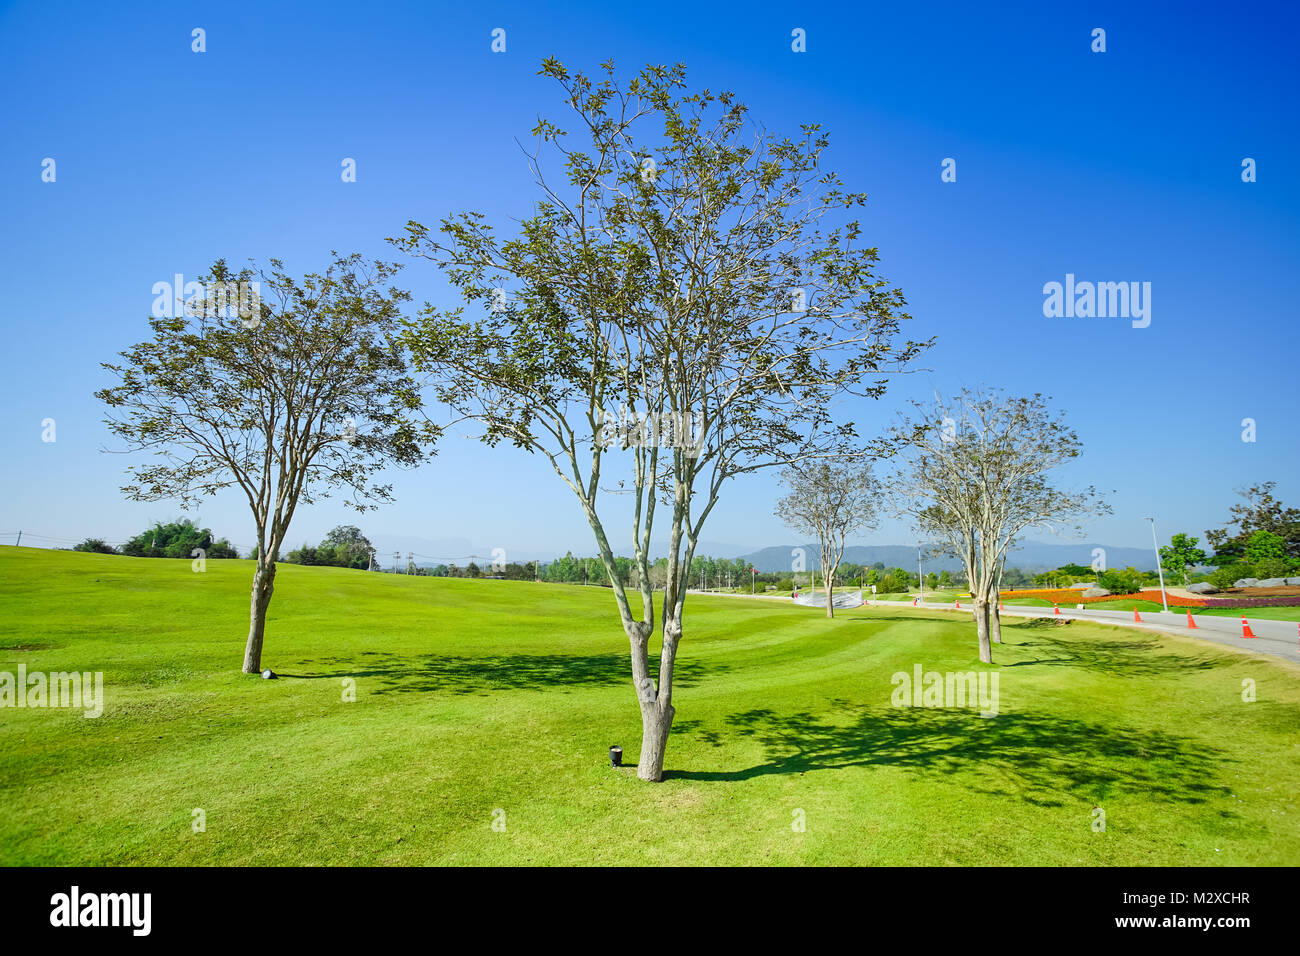 Bel arbre herbe verte et fond de ciel bleu Banque D'Images